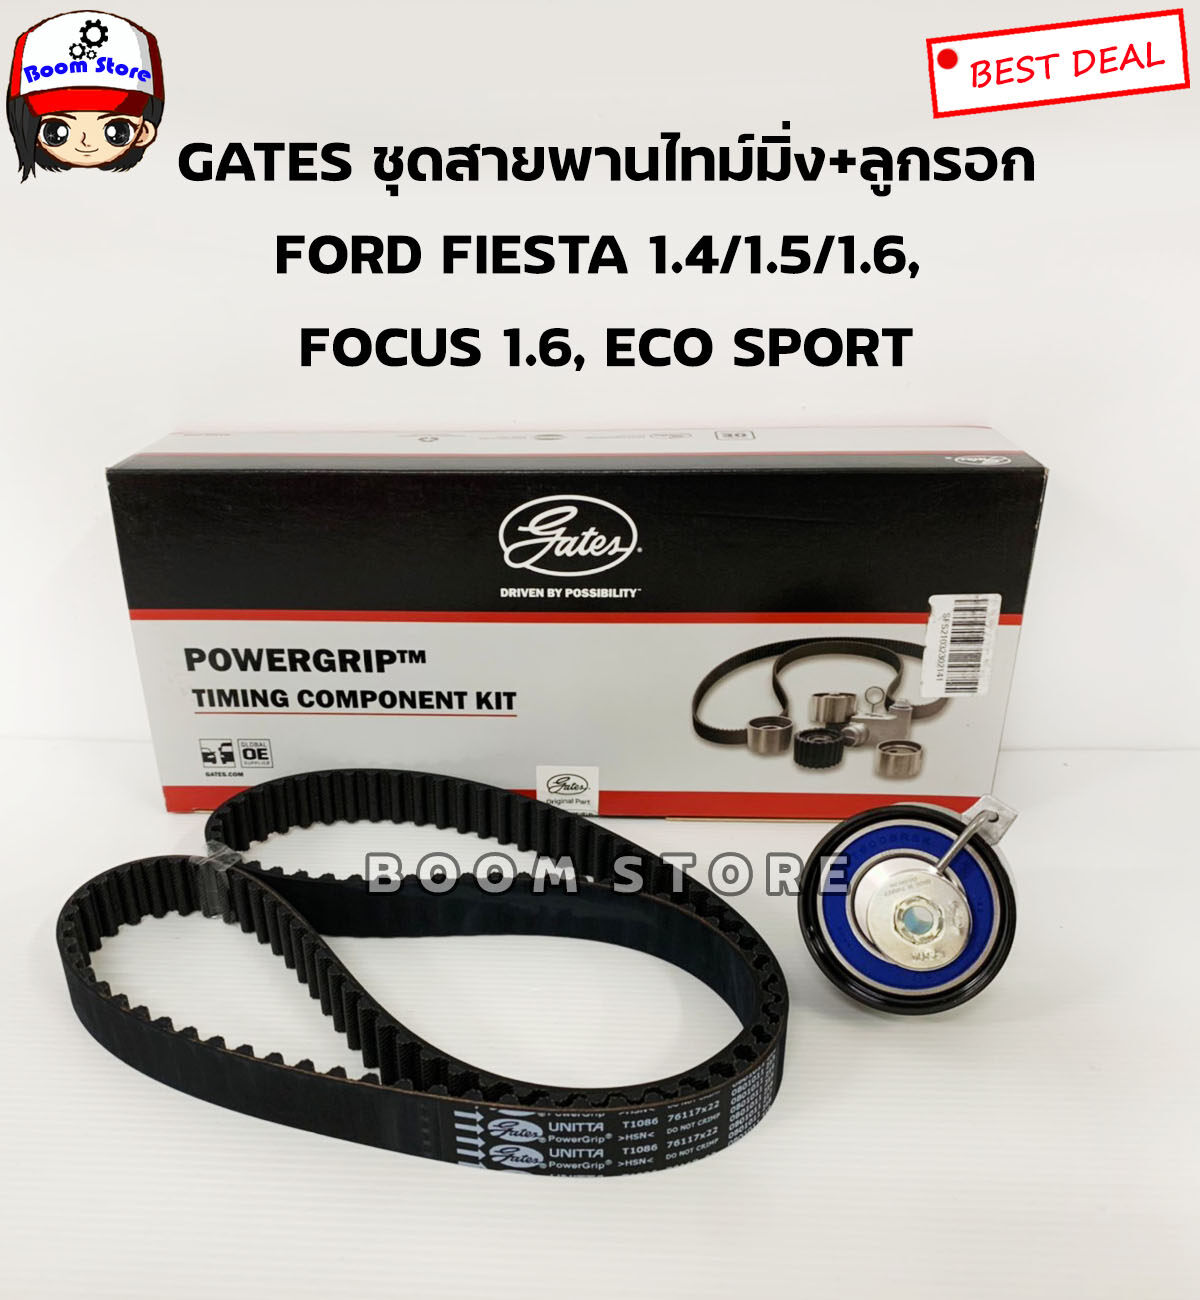 Gates (TCK 1086N) ชุดสายพานราวลิ้น+ลูกลอก สำหรับรถยนต์ FORD Fiesta 1.4/1.6CC ปี 10และรุ่น Focus 1.6 Duratec, Ecosport 1.5TI, S40 1.6CC ปี 04